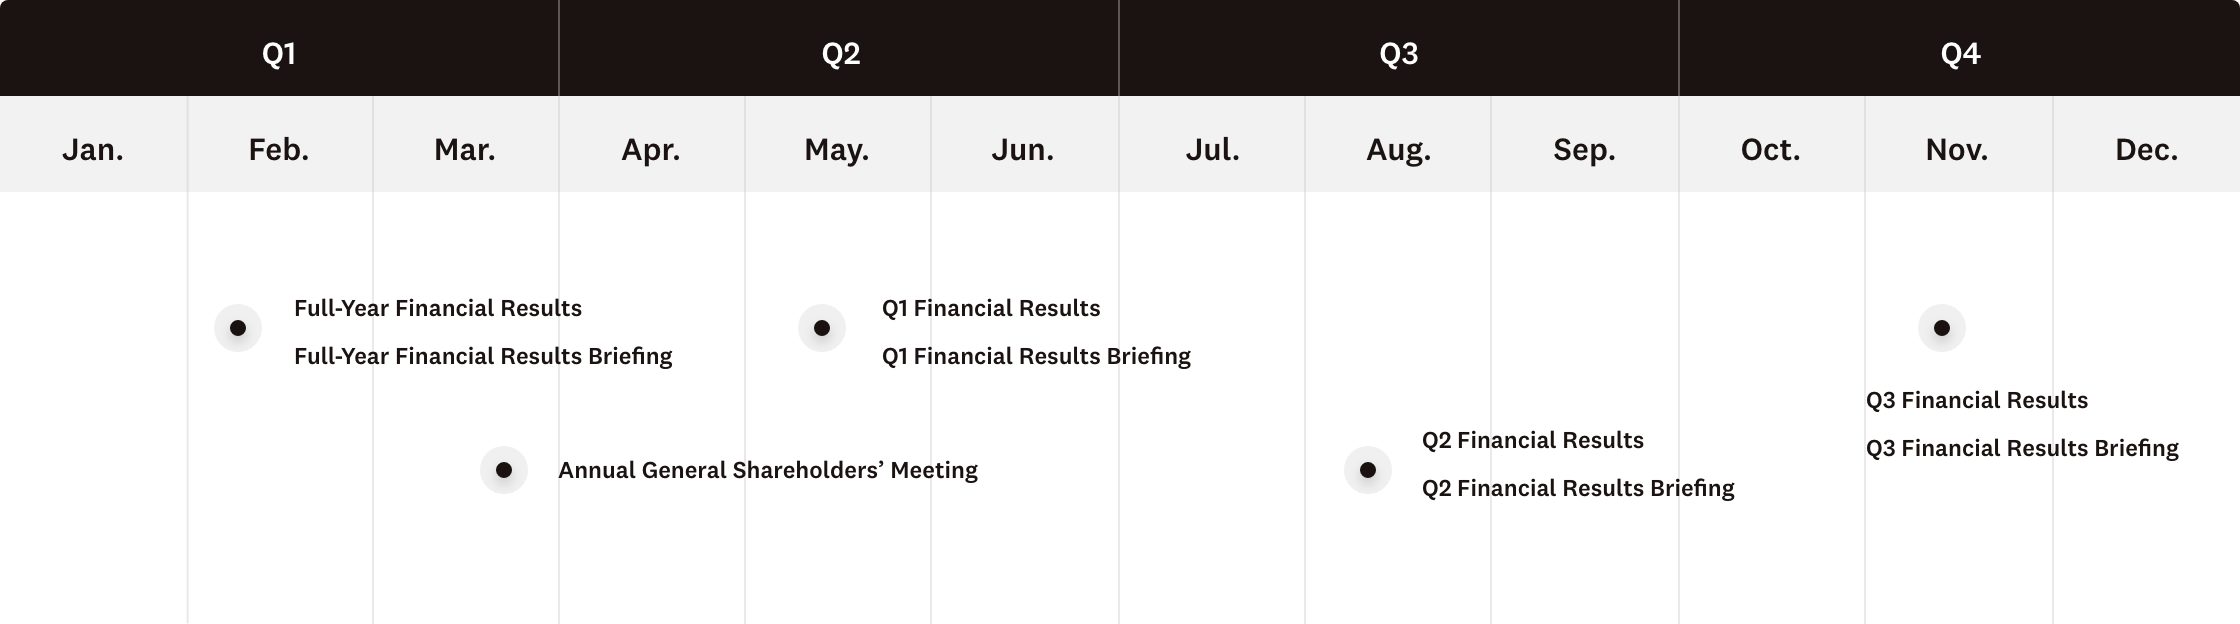 Investor relations calendar